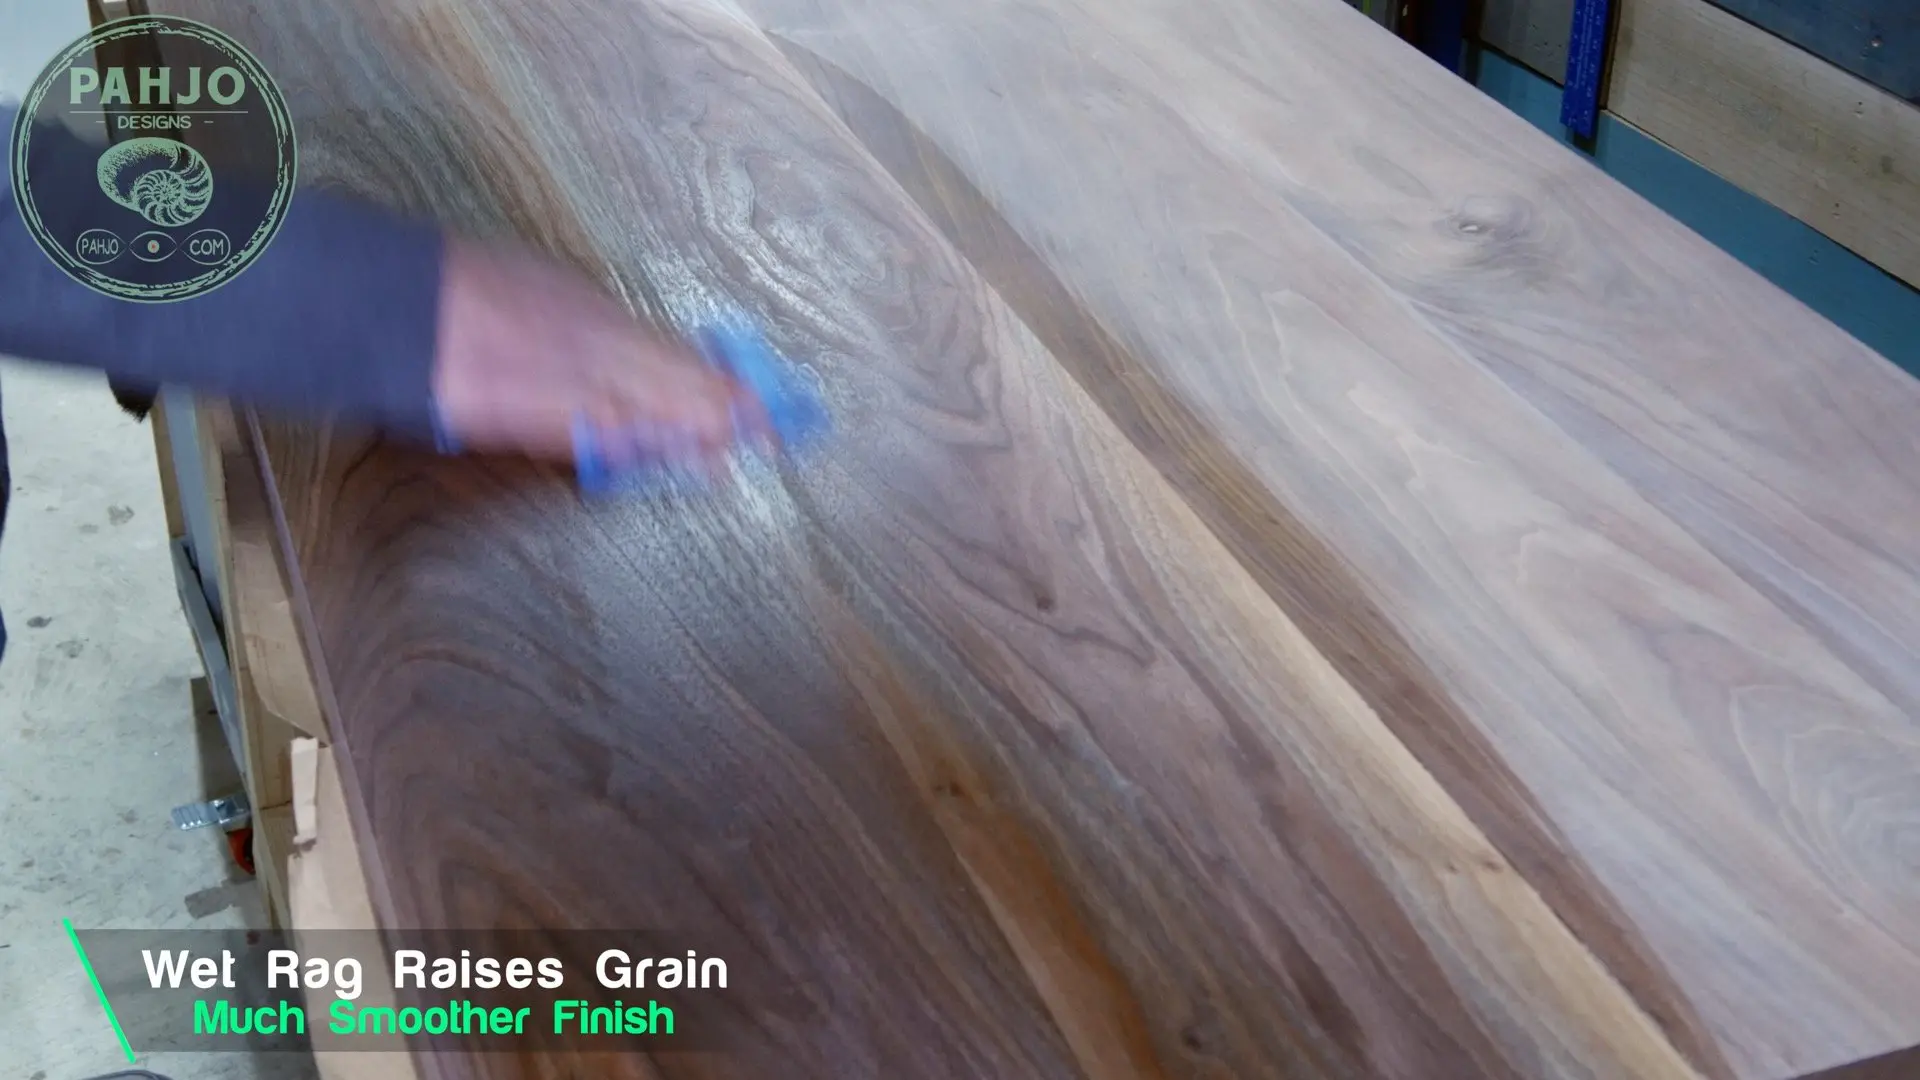 wood table sanding raise grain with wet rag